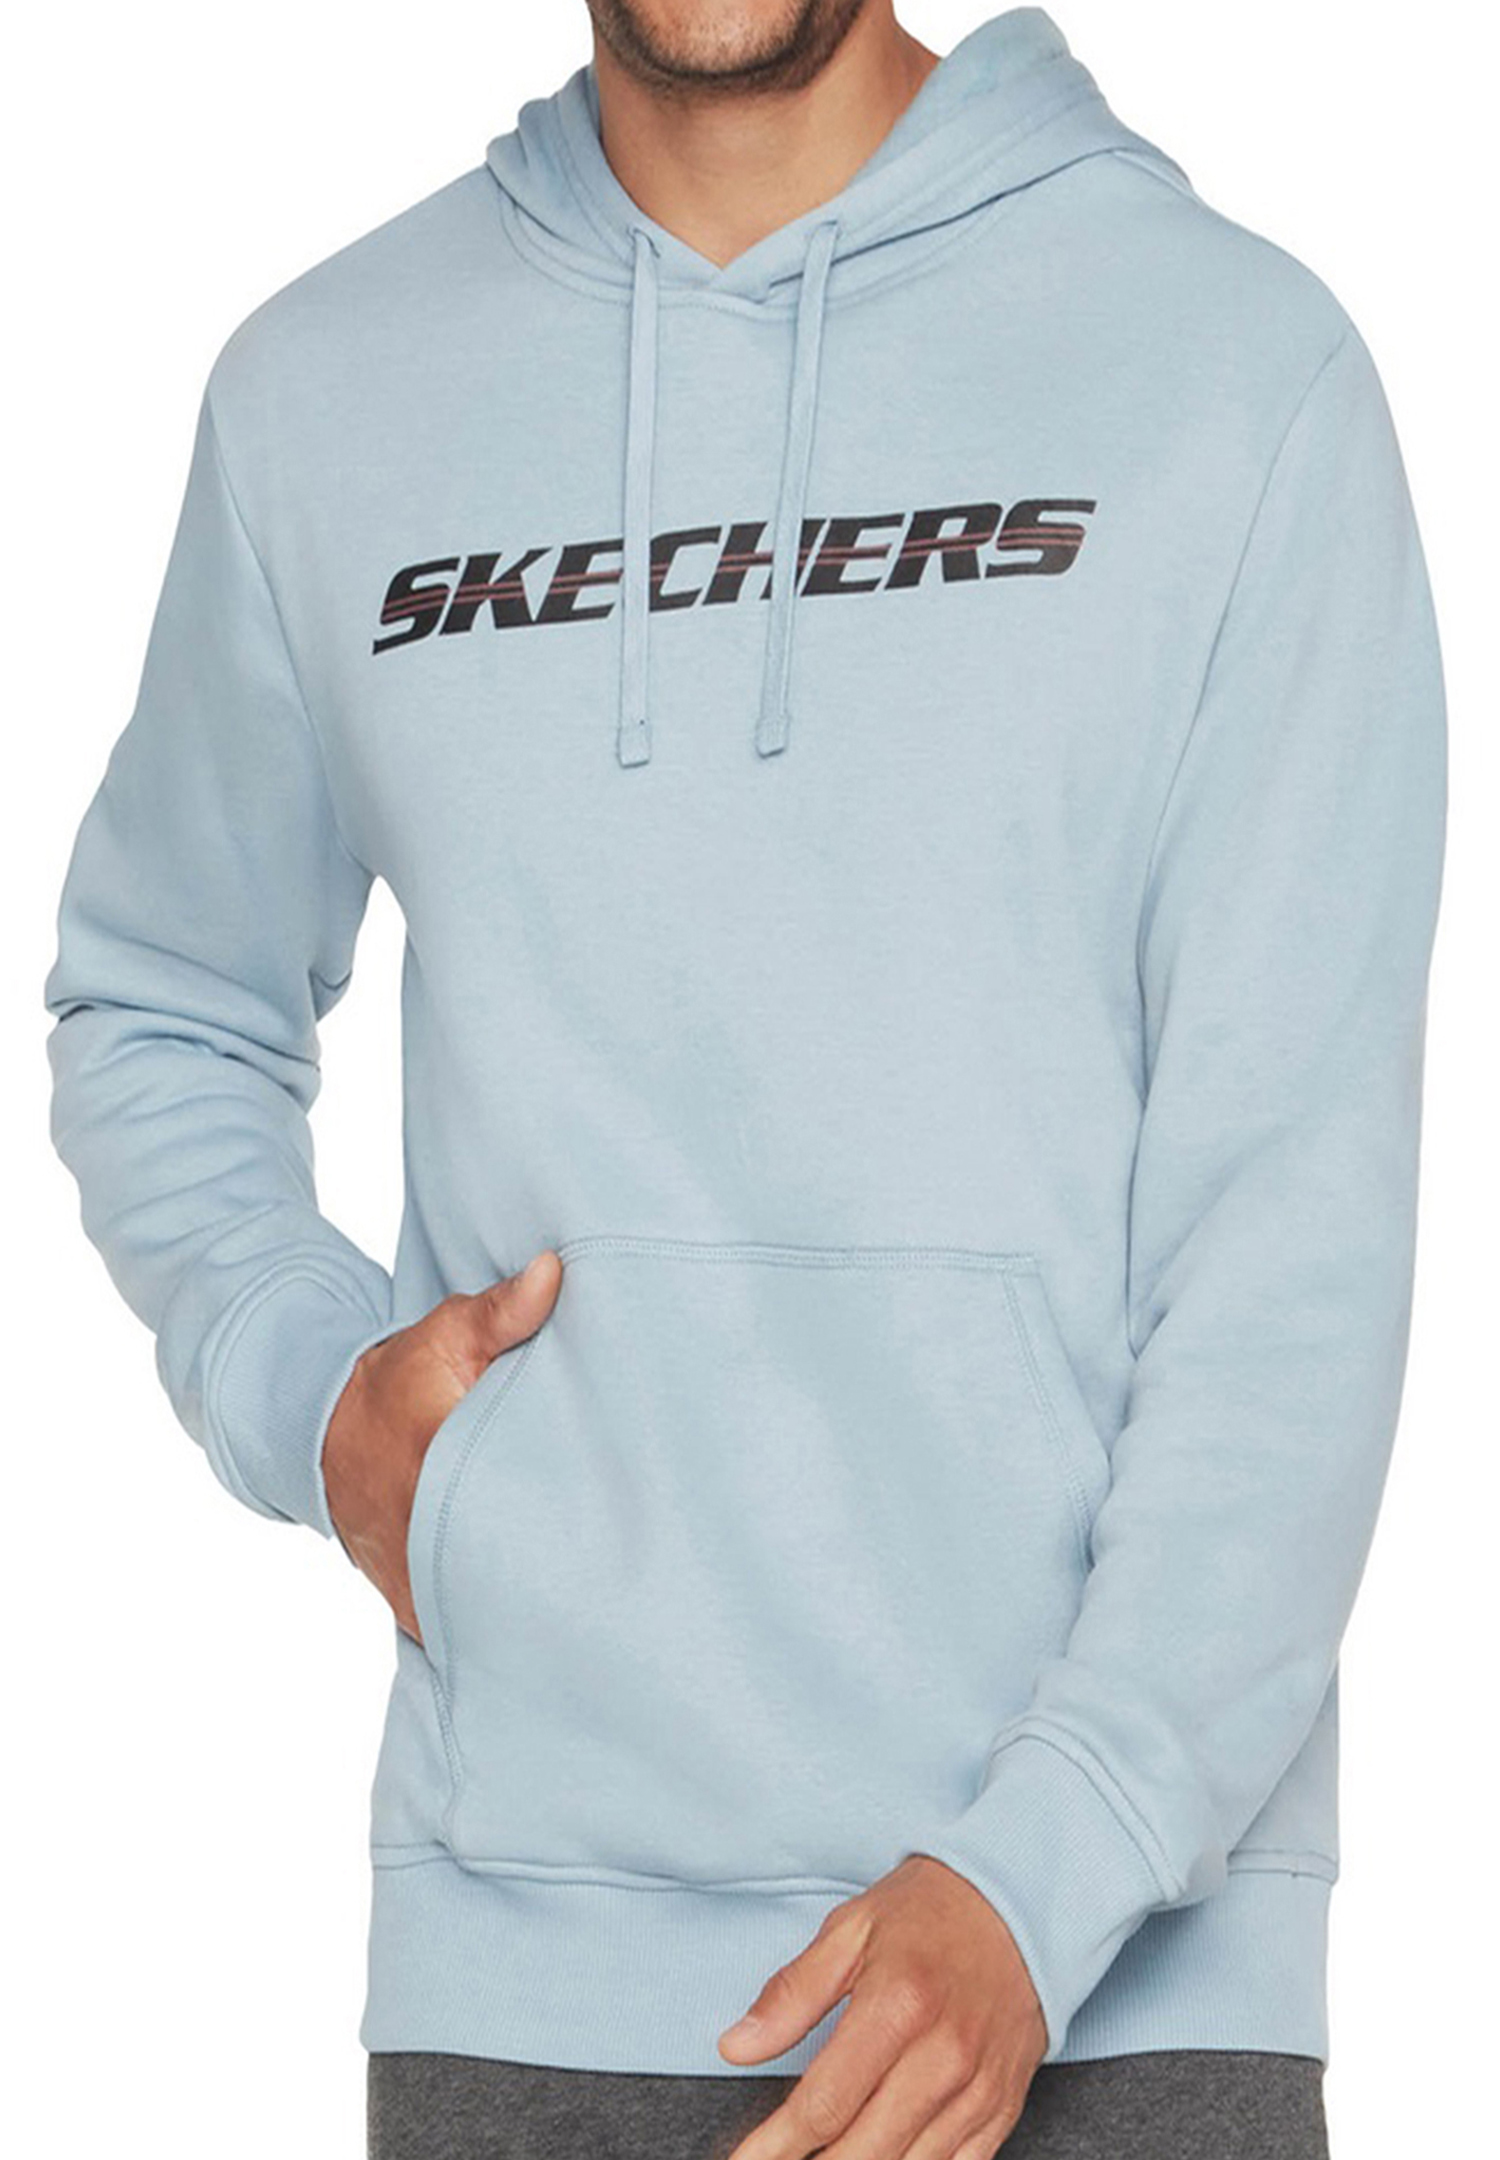 Skechers SKECH-SWEATS MOTION PULLOVER HOODIE Herren Kapuzensweatshirt MHD81 blau 